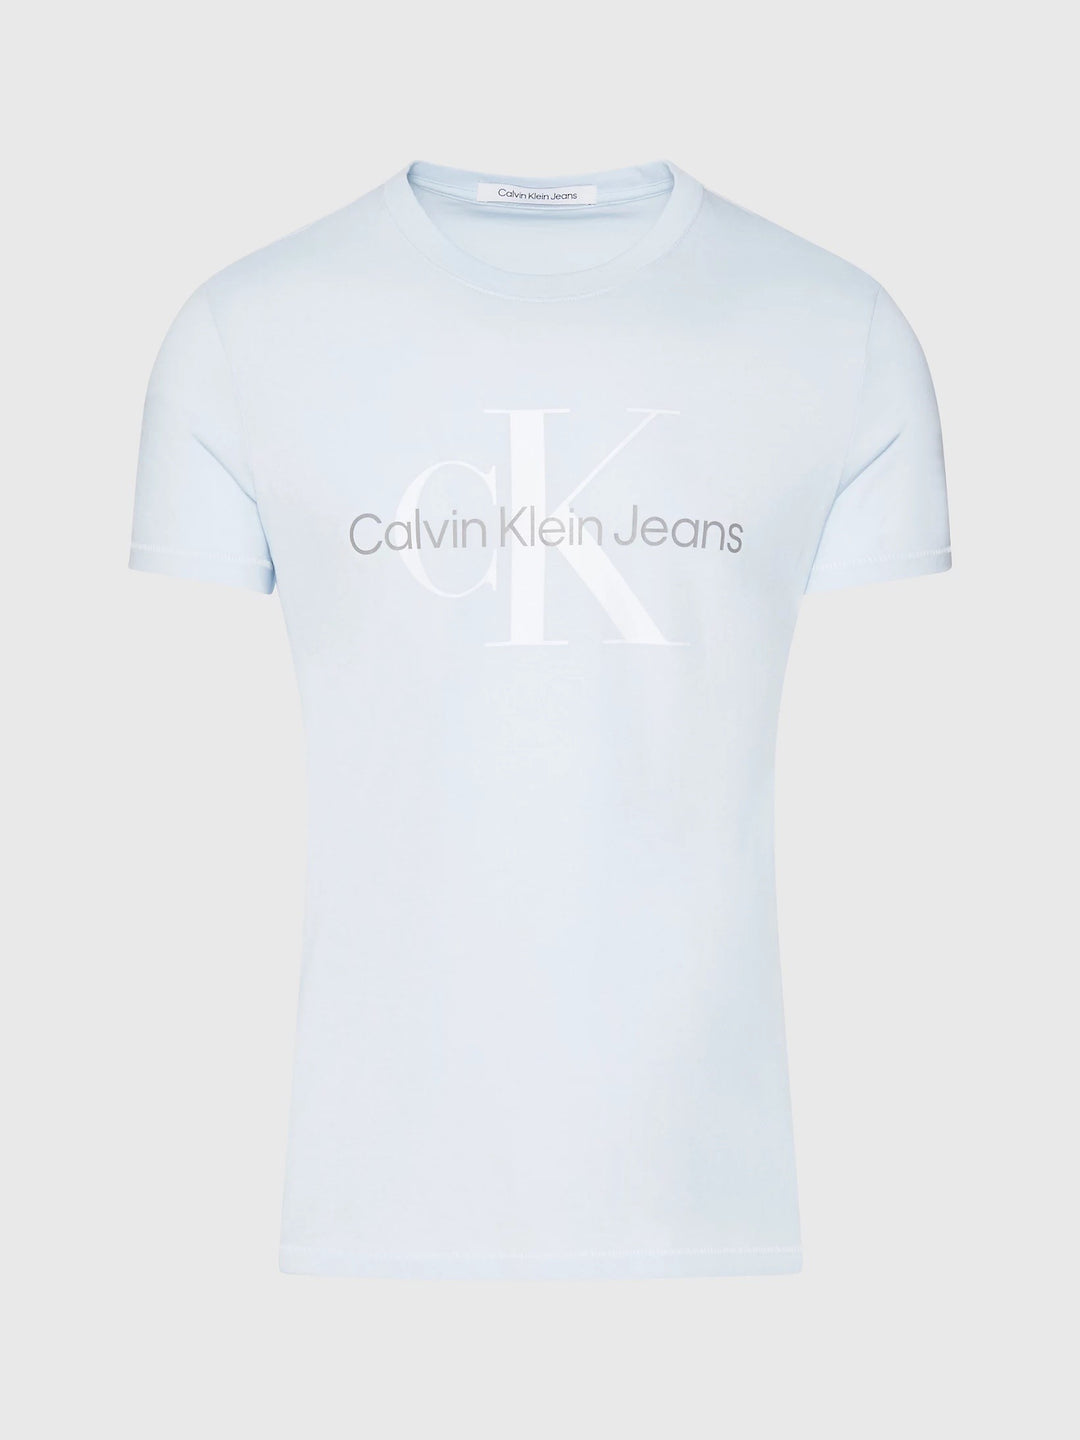 T CALVIN KLEIN – 2 JEANS Page – Menswear W